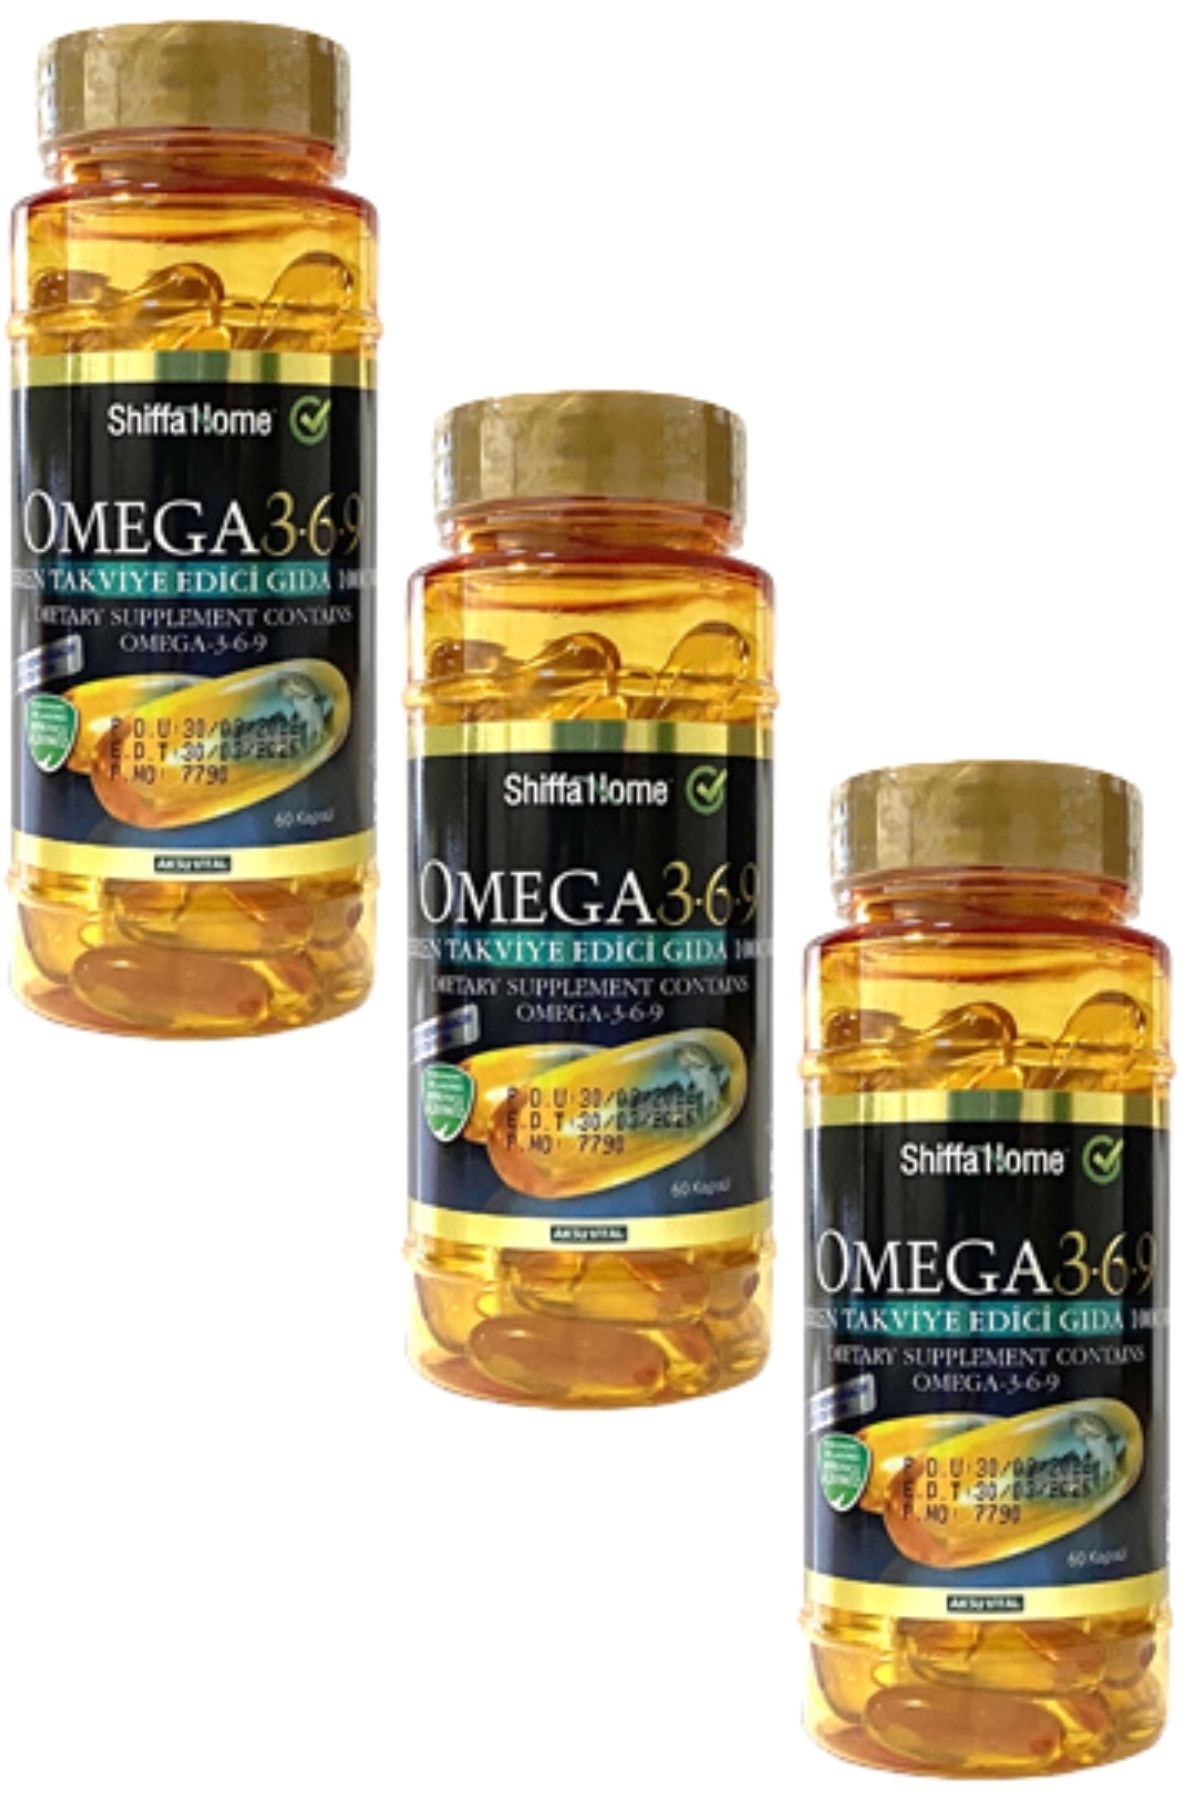 Shiffa Home Omega 3-6-9 Balık Yağı Trigliserit Form 1000mg 60 Softgel X 3 Adet